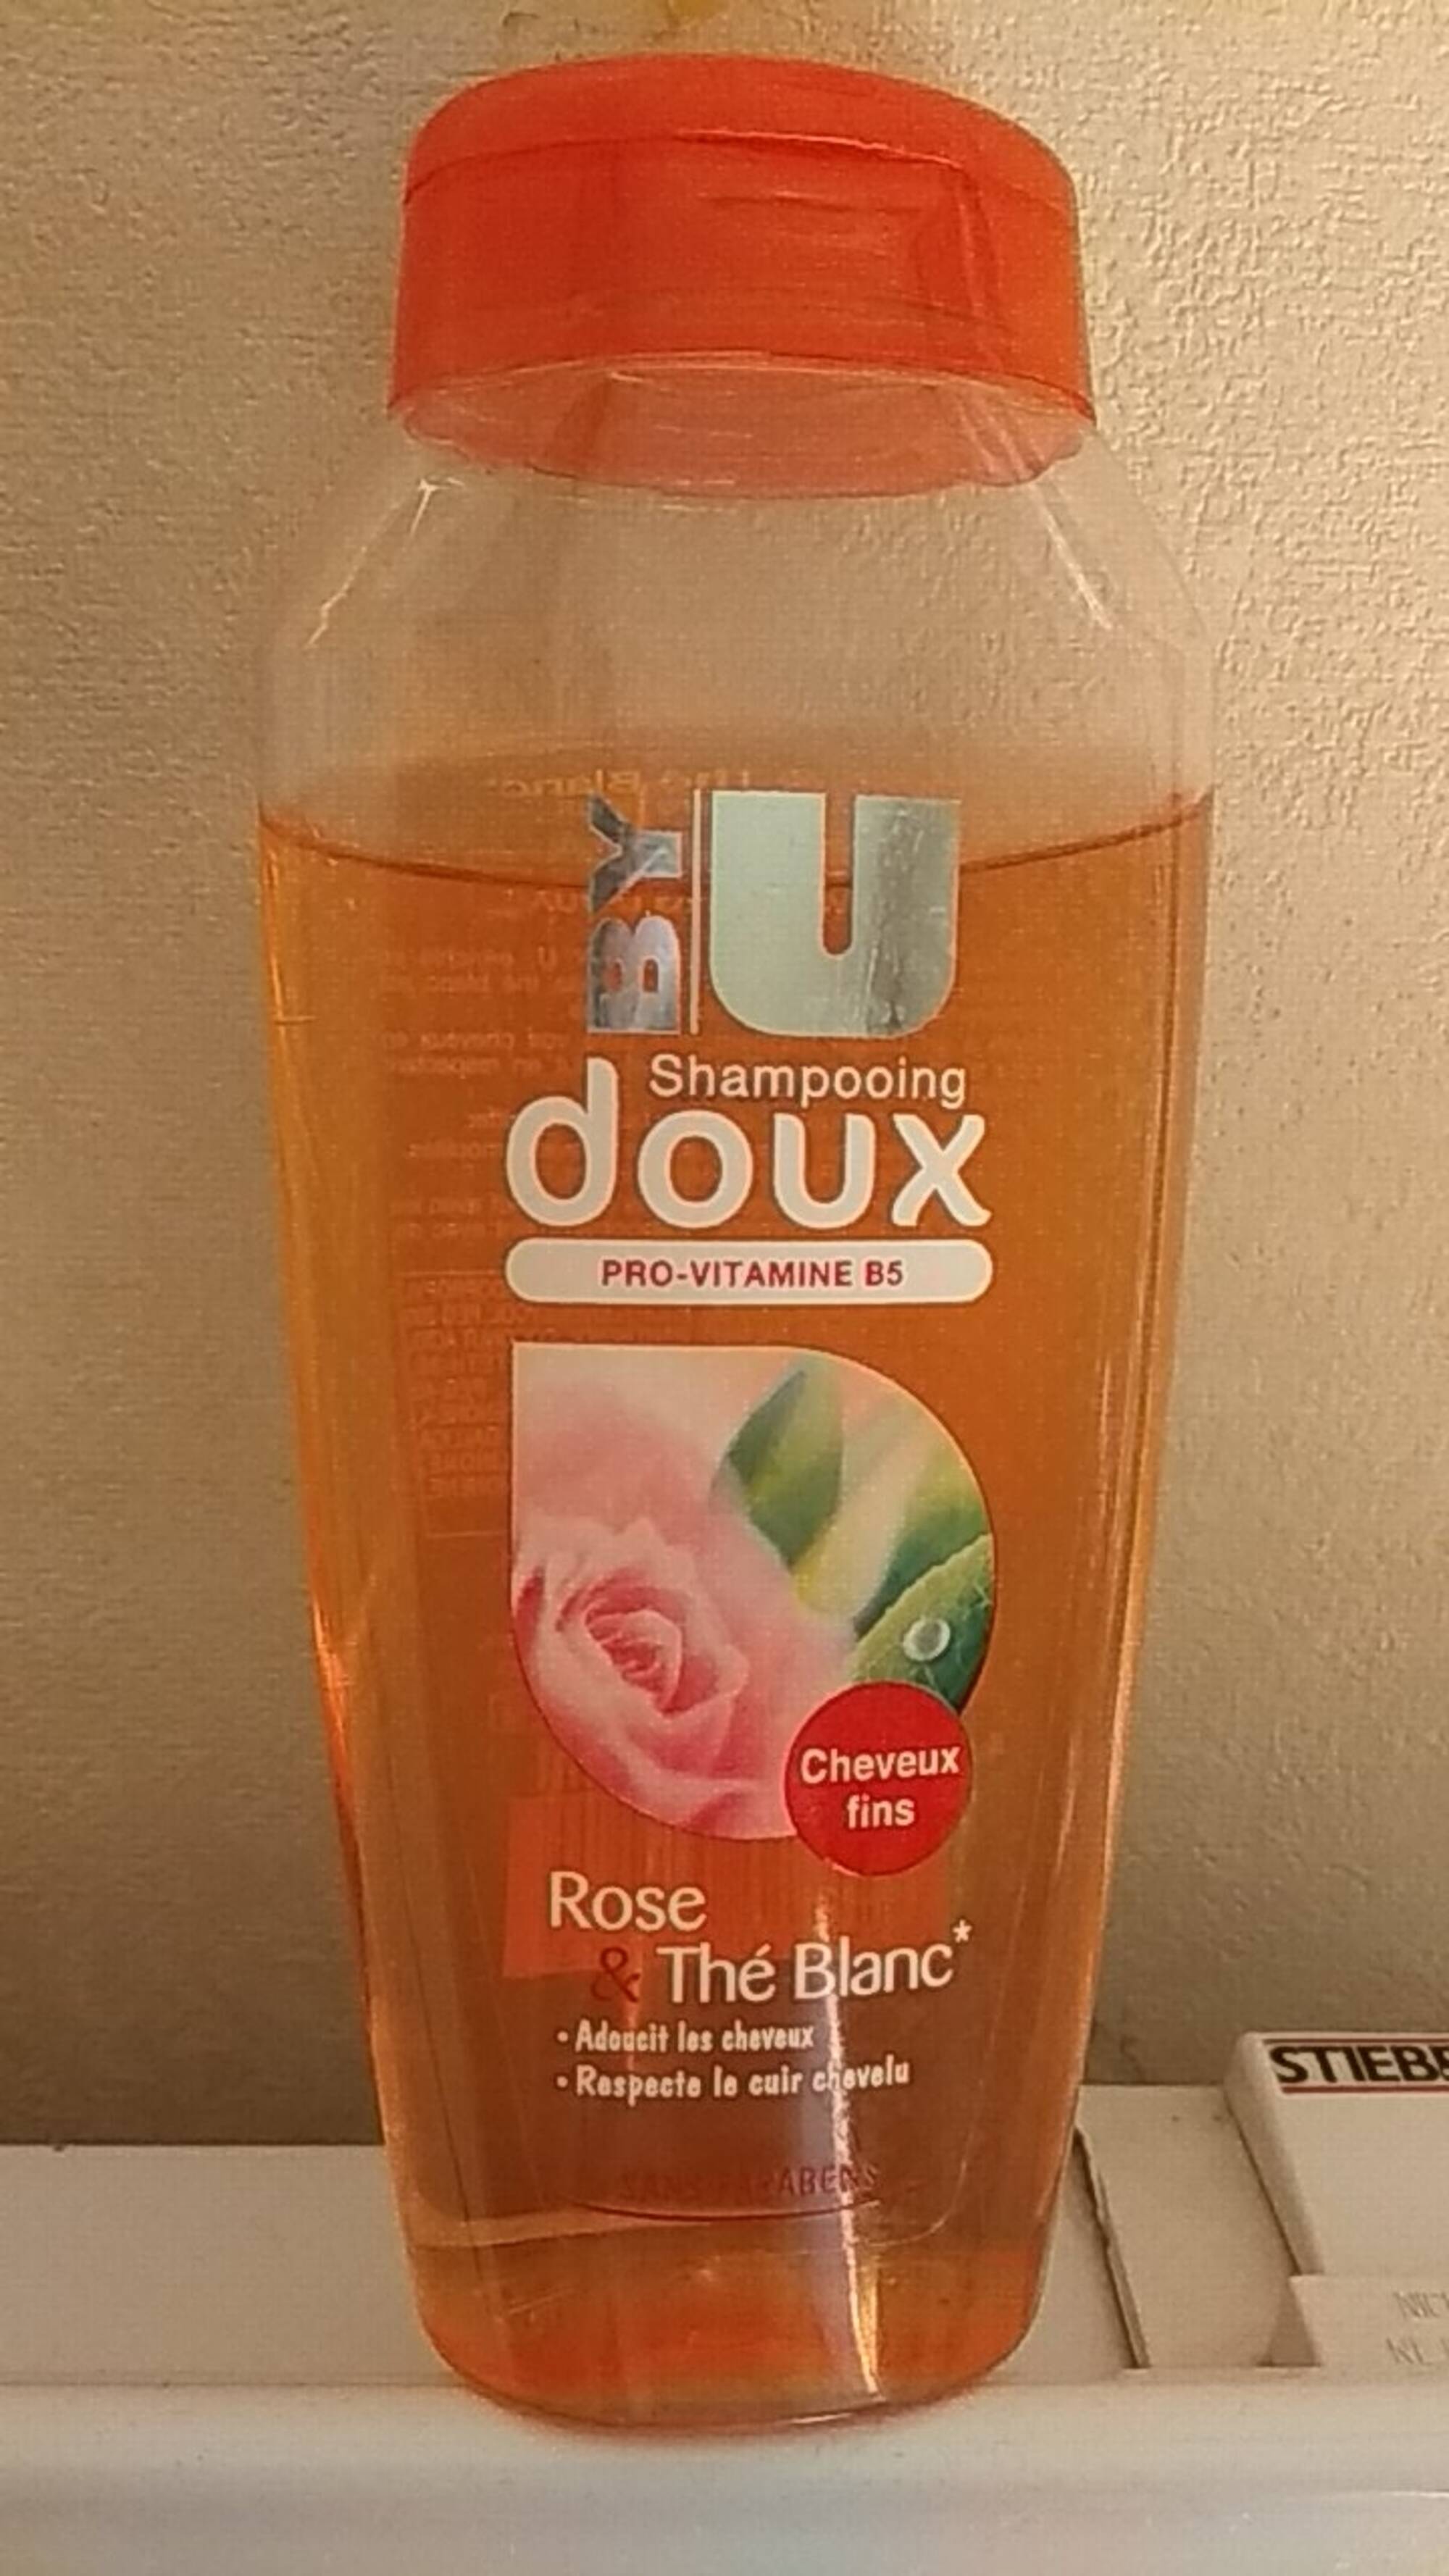 BY U - Rose & thé blanc - Shampooing doux